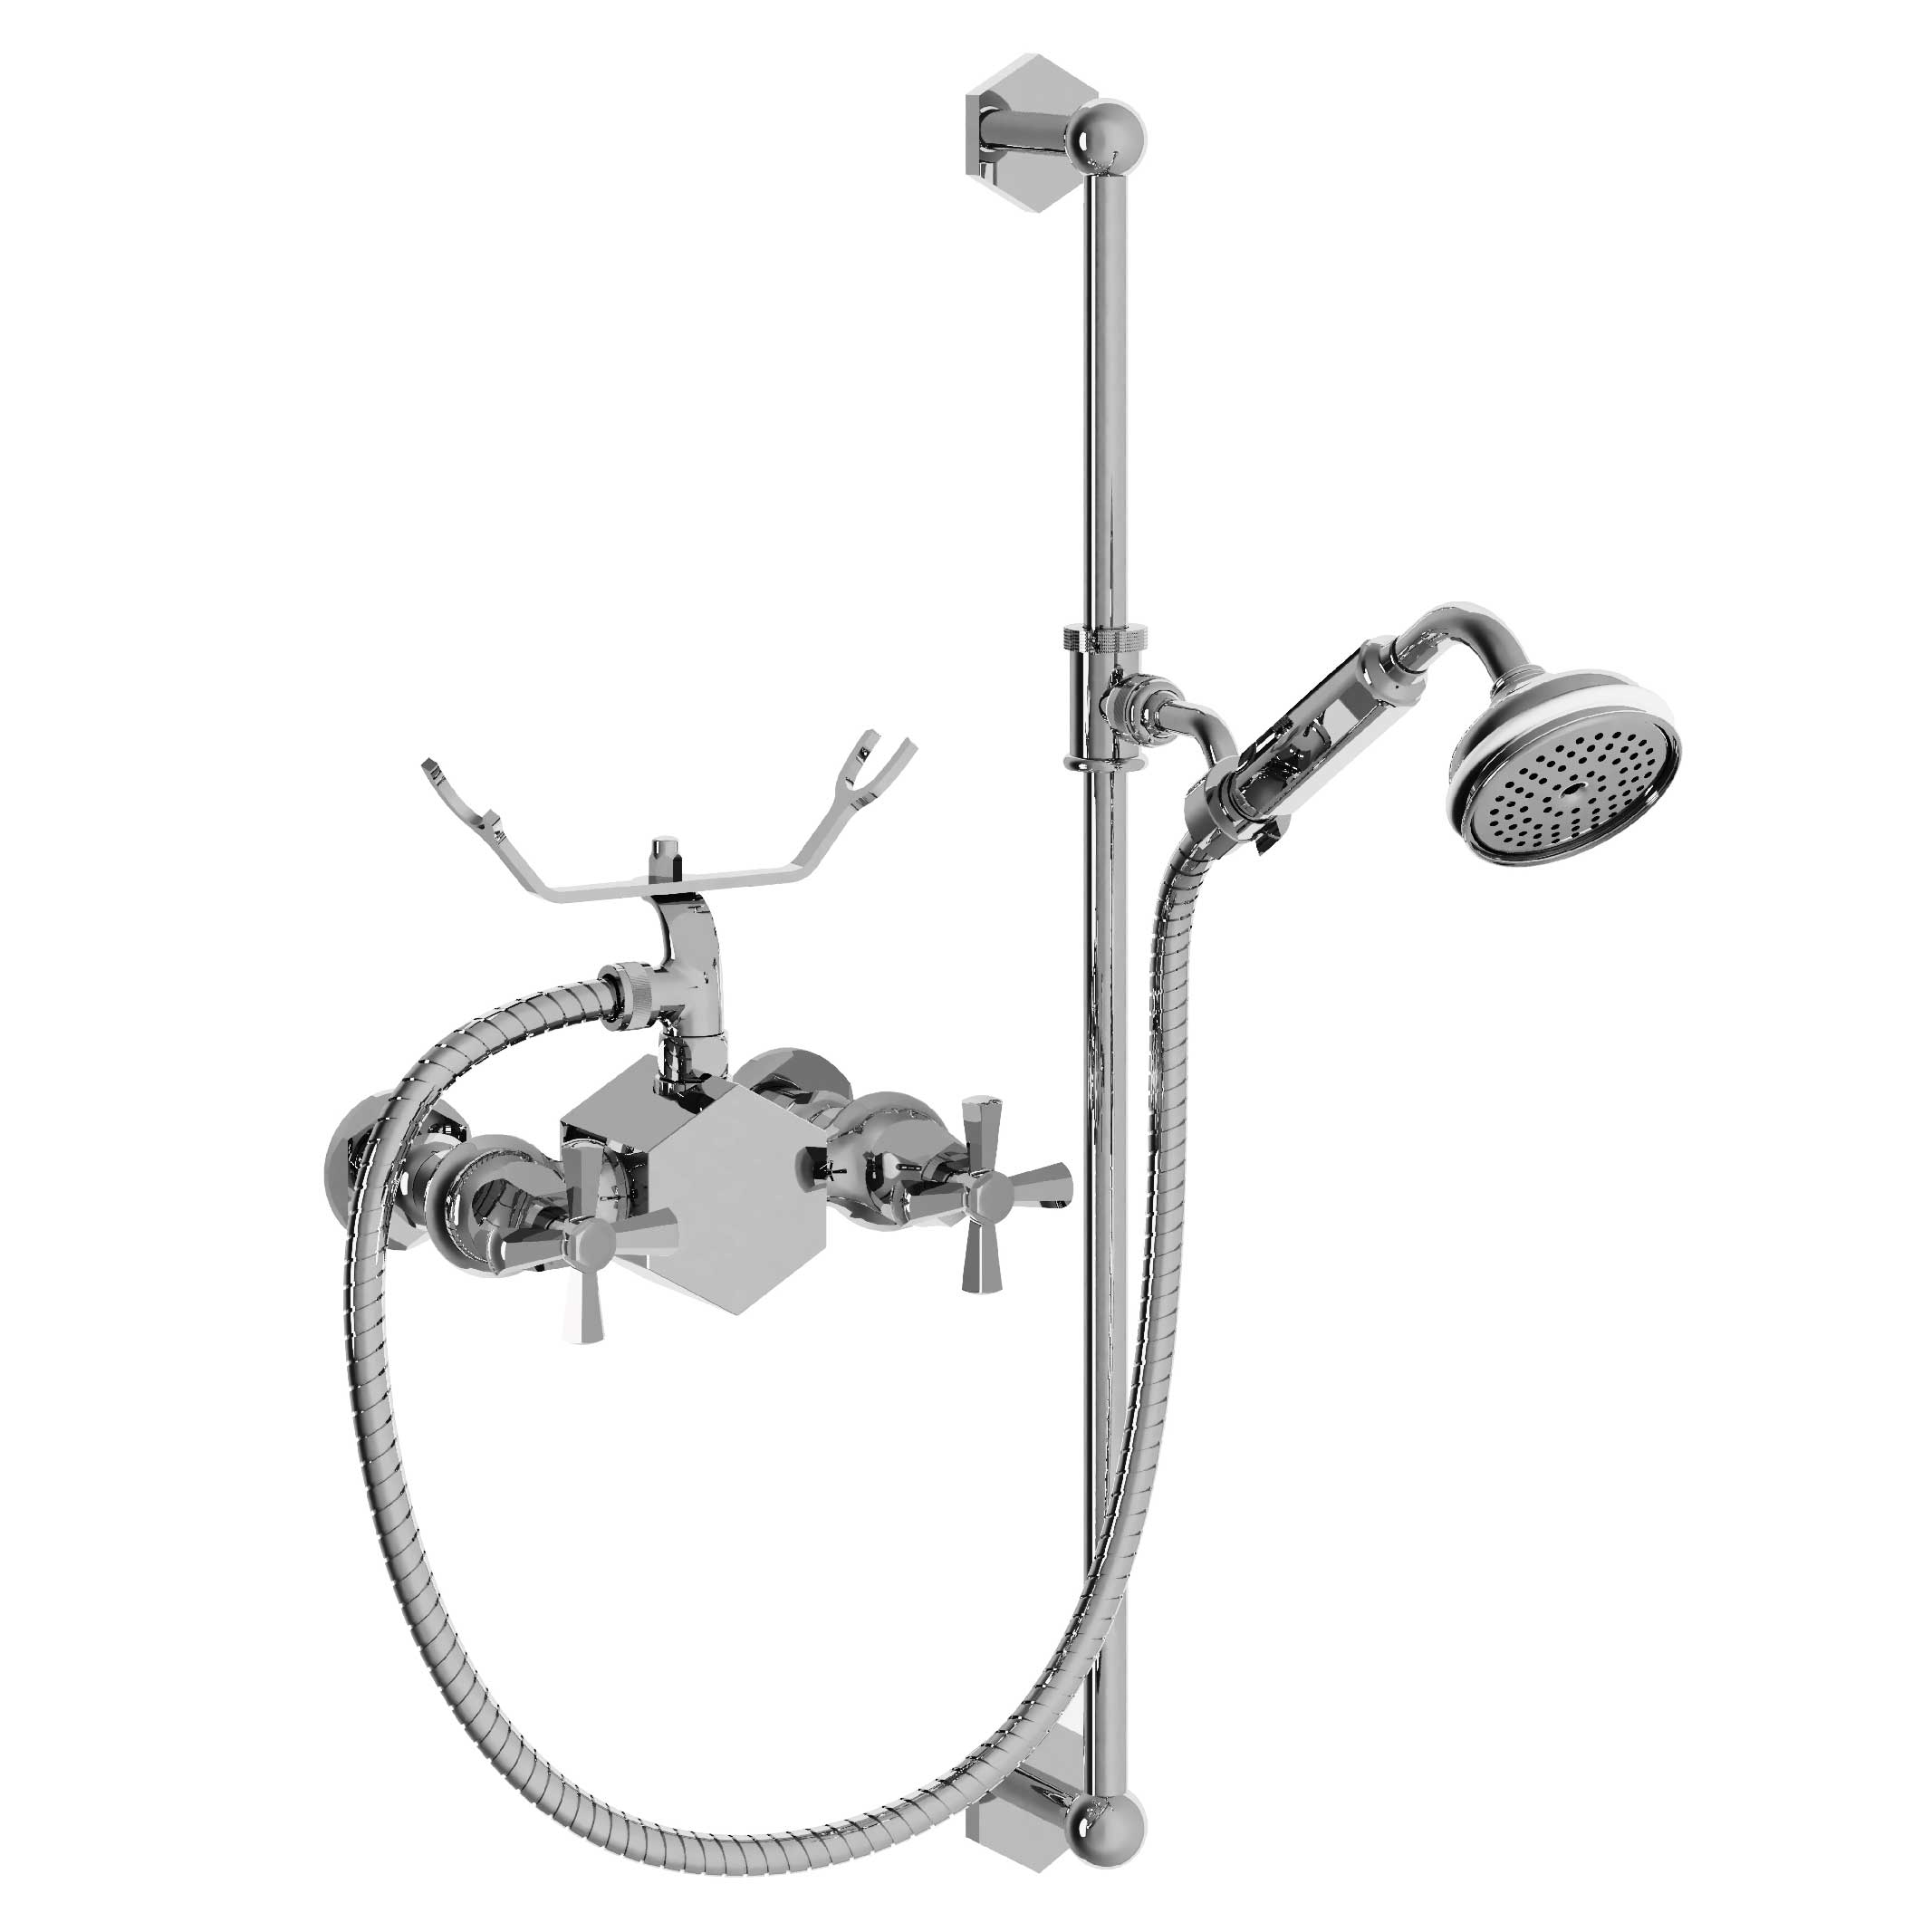 M13-2202 Shower mixer with sliding bar